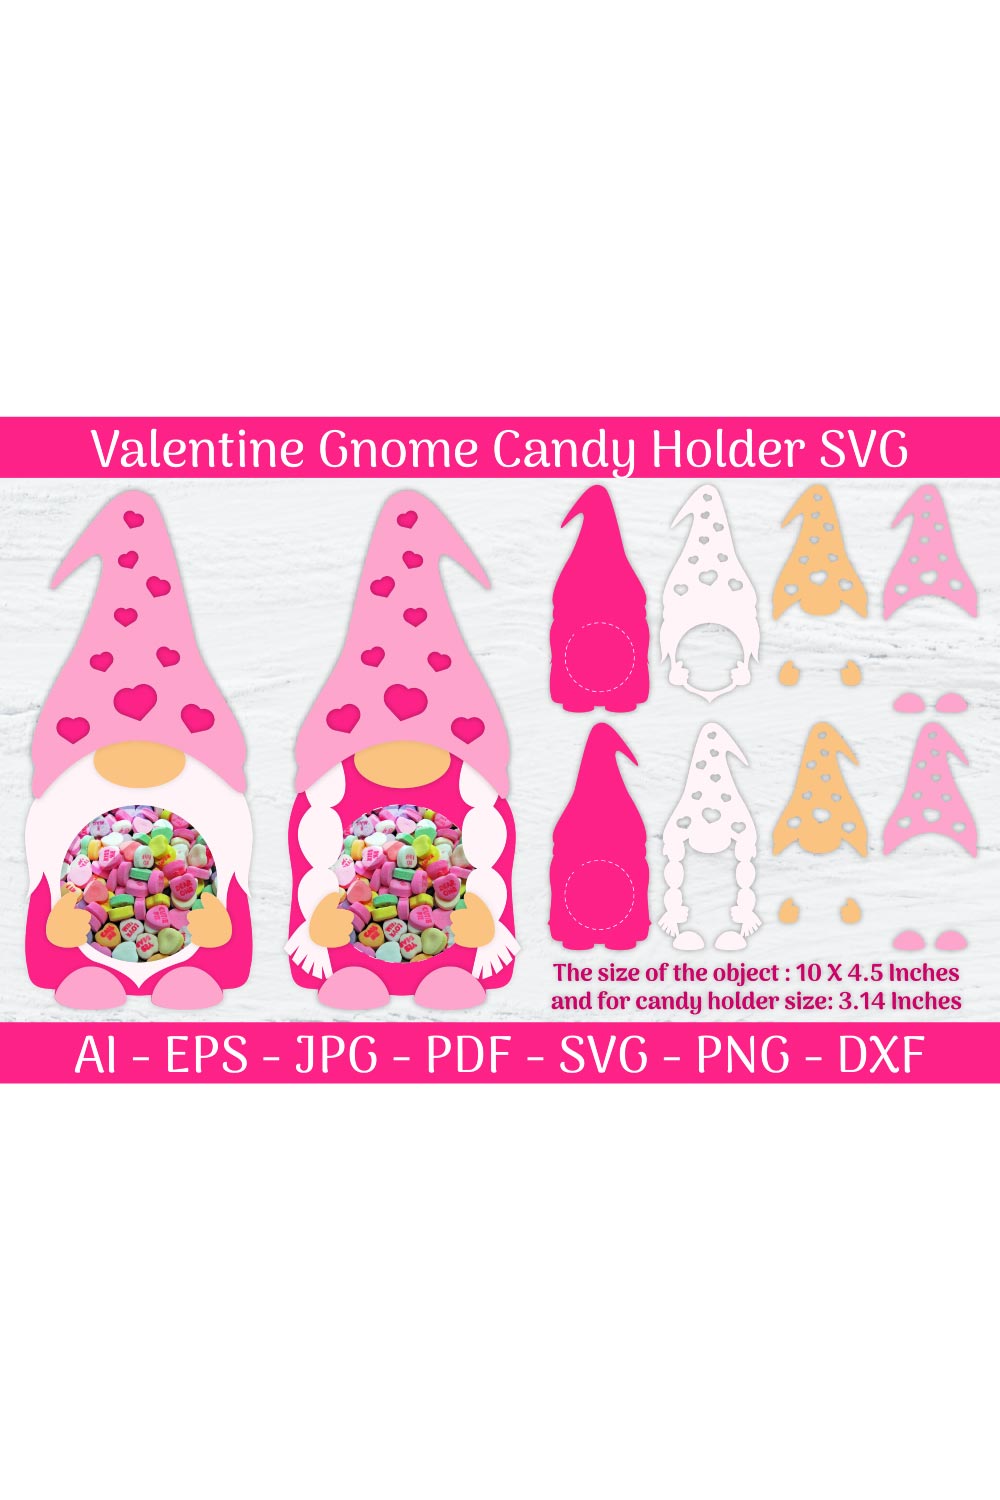 Valentine Gnome Candy Holder SVG pinterest preview image.